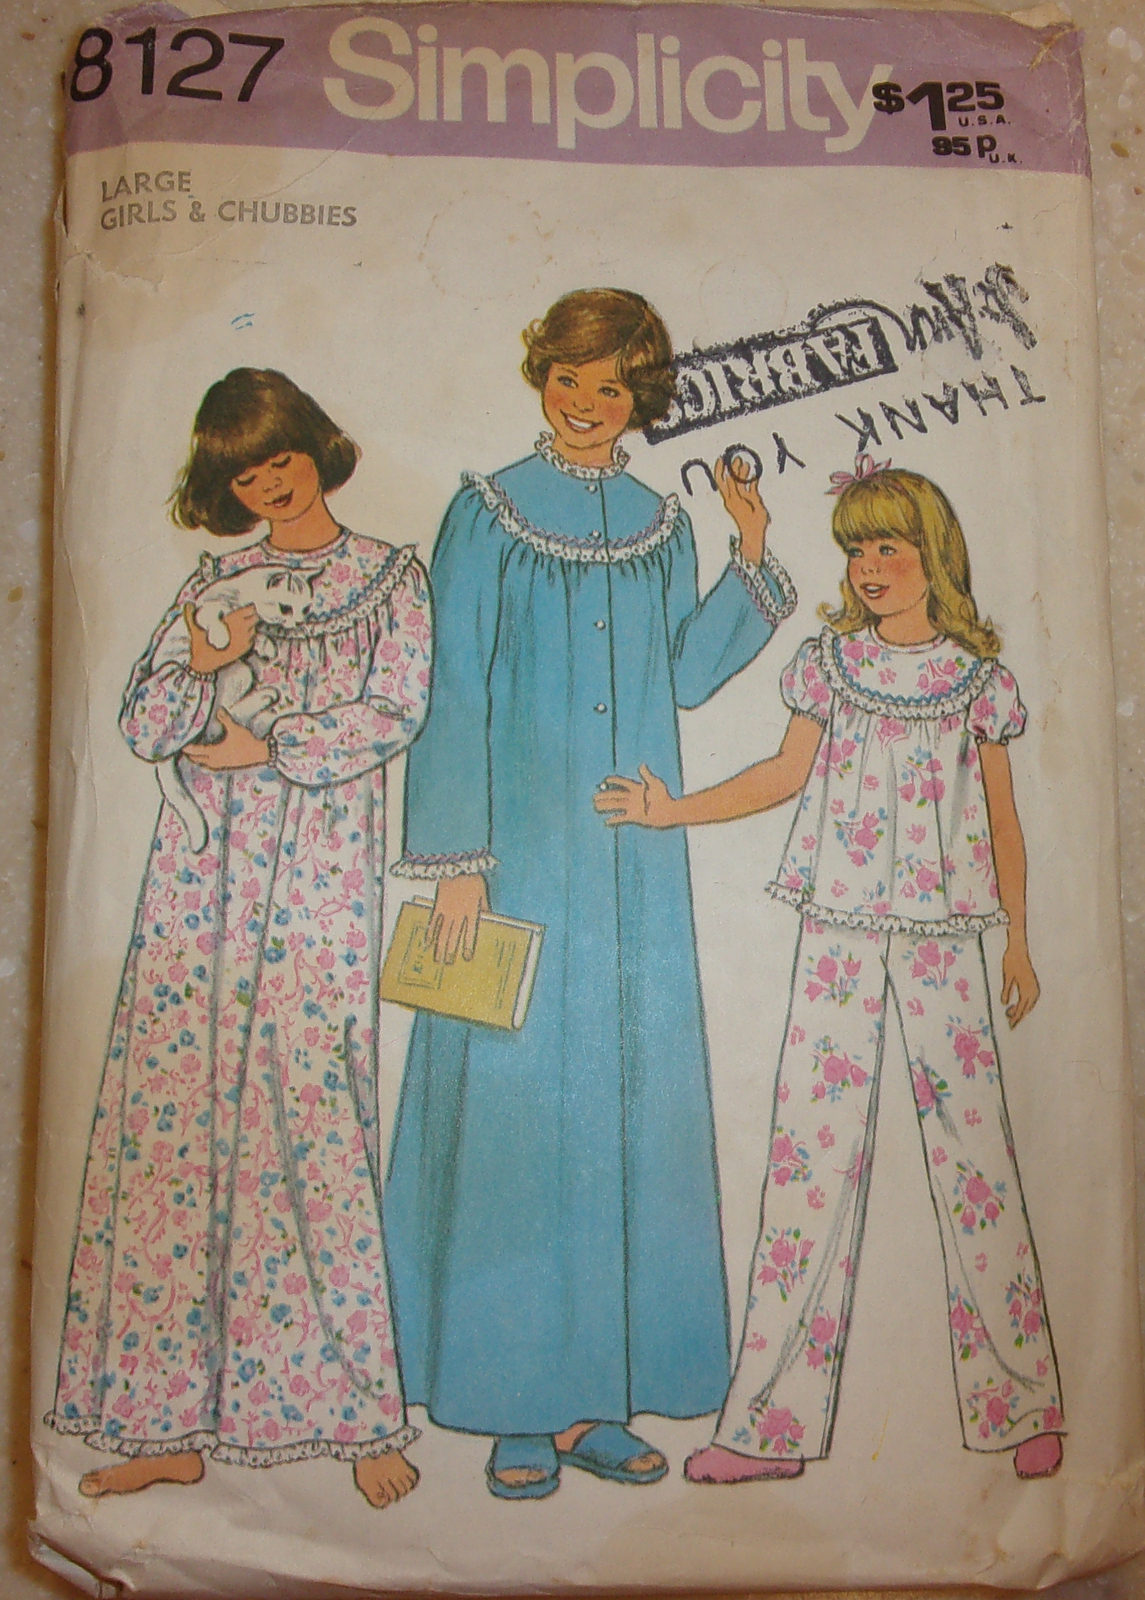 Simplicity Girls’ & Chubbies’ NIghtgown Pajamas & Robe Size Large #8127 - $5.99